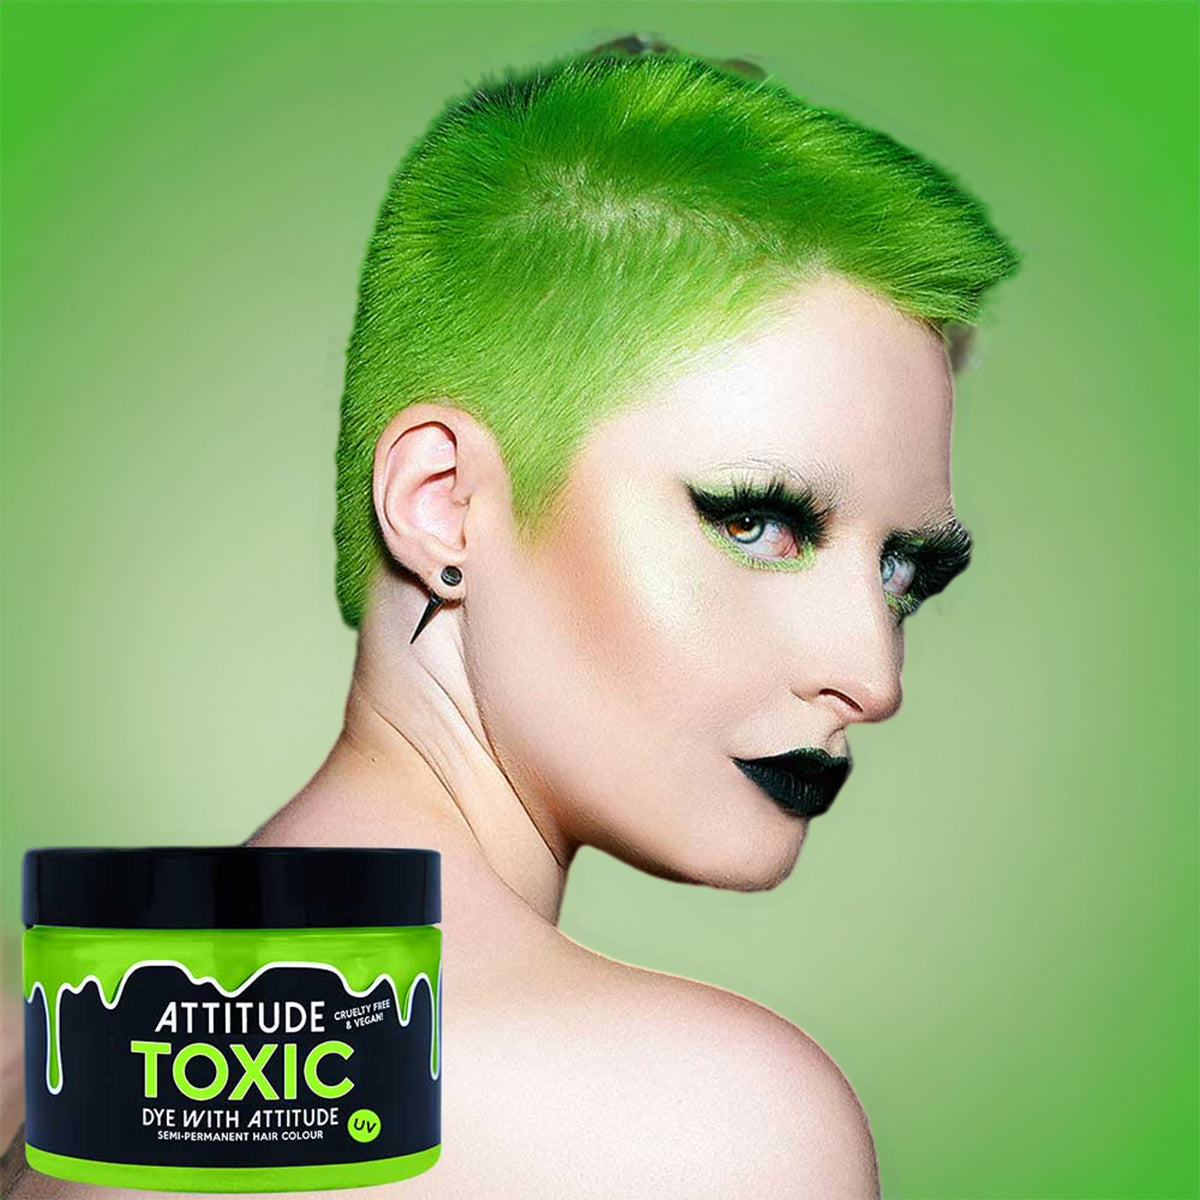 TOXIC UV GREEN - Attitude Hair Dye - 135ml